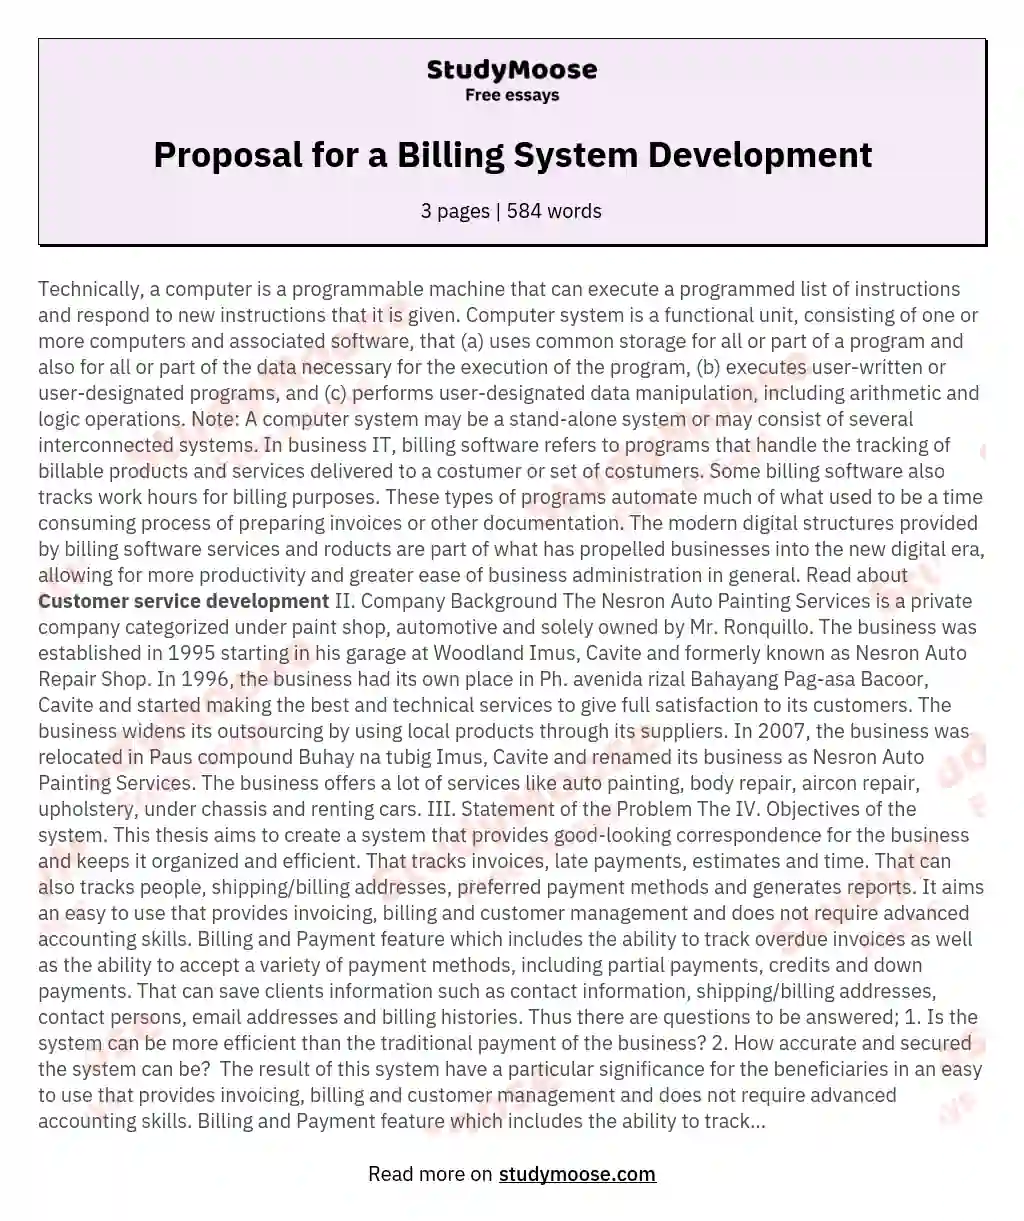 Proposal for a Billing System Development essay